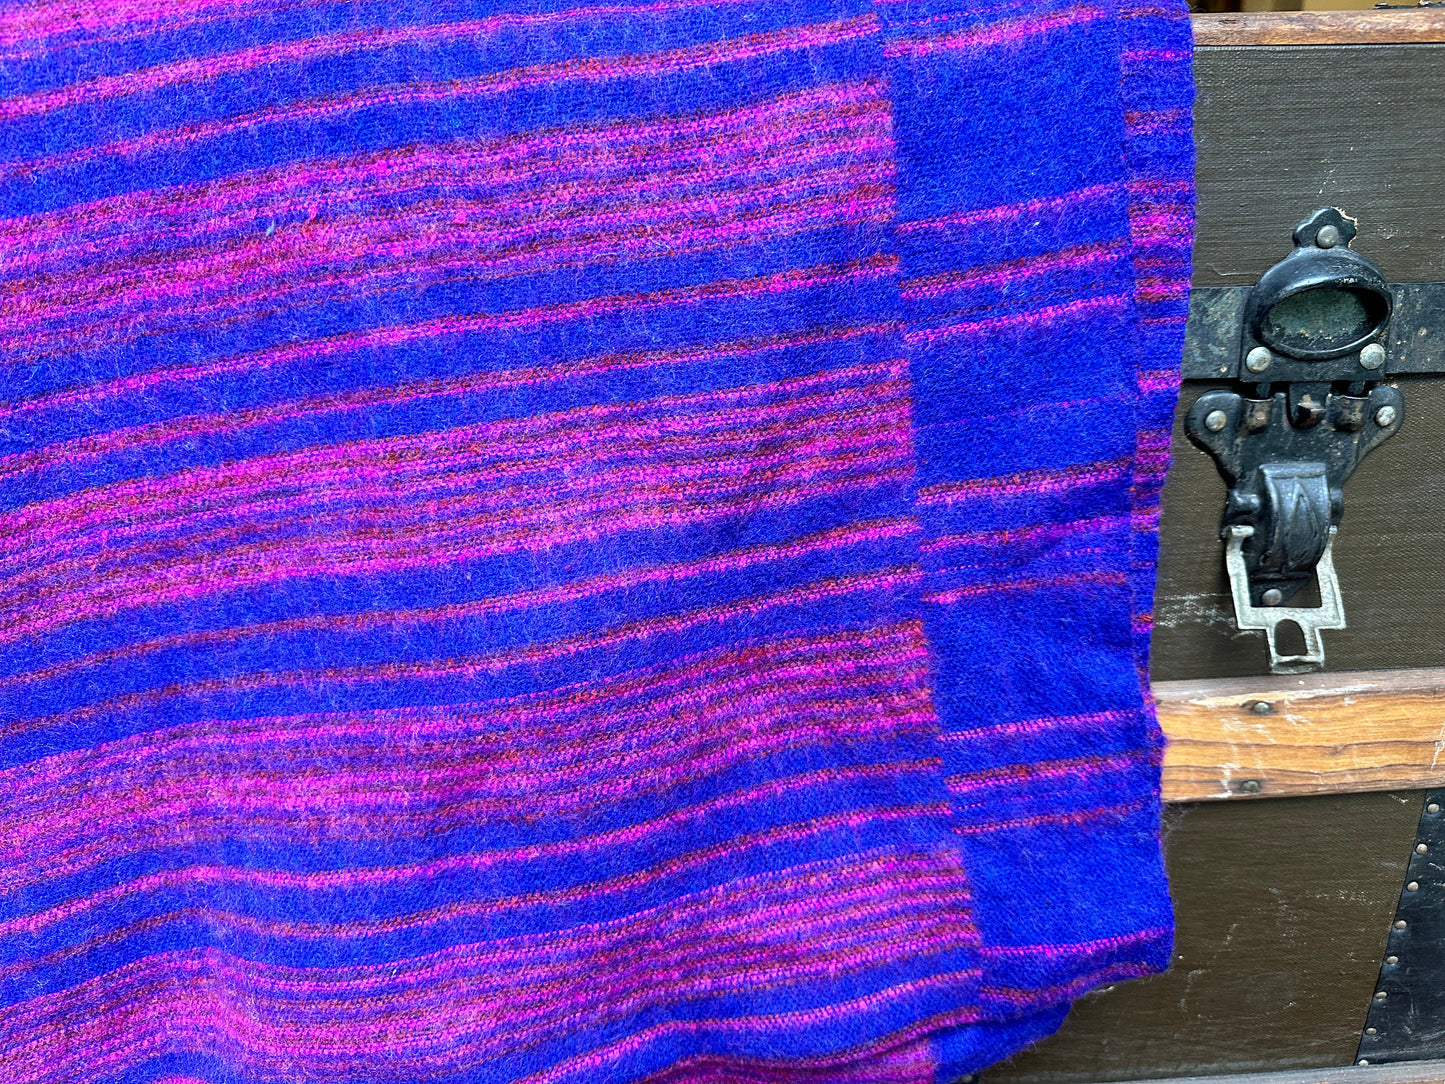 Bonfire Blankets in Purple - DharBazaar